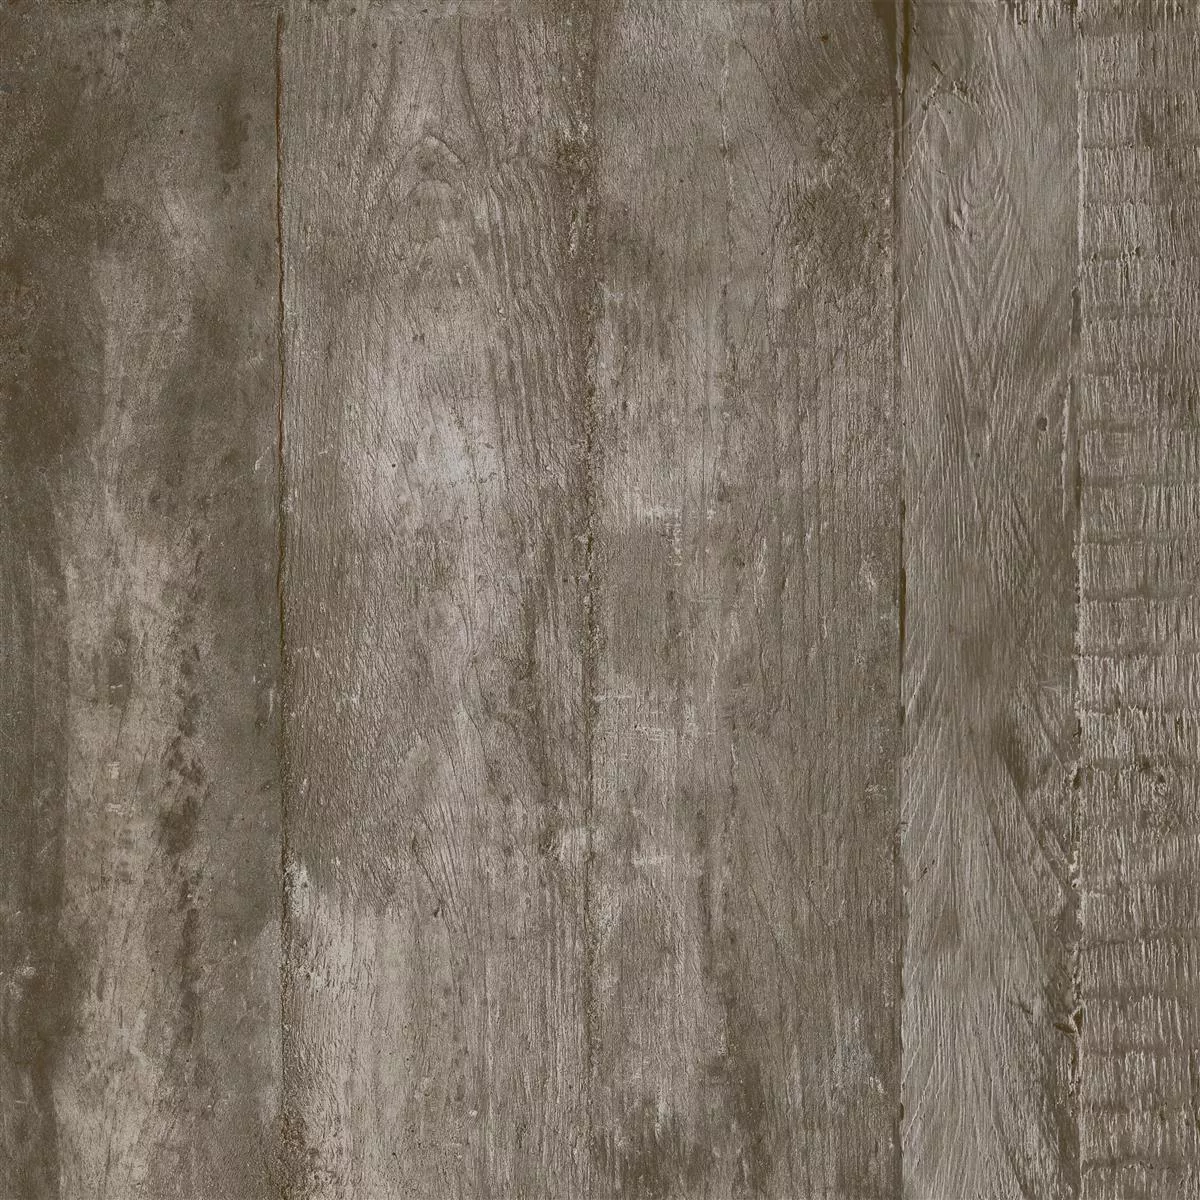 Sample Floor Tiles Gorki Wood Optic 60x60 Glazed Brown